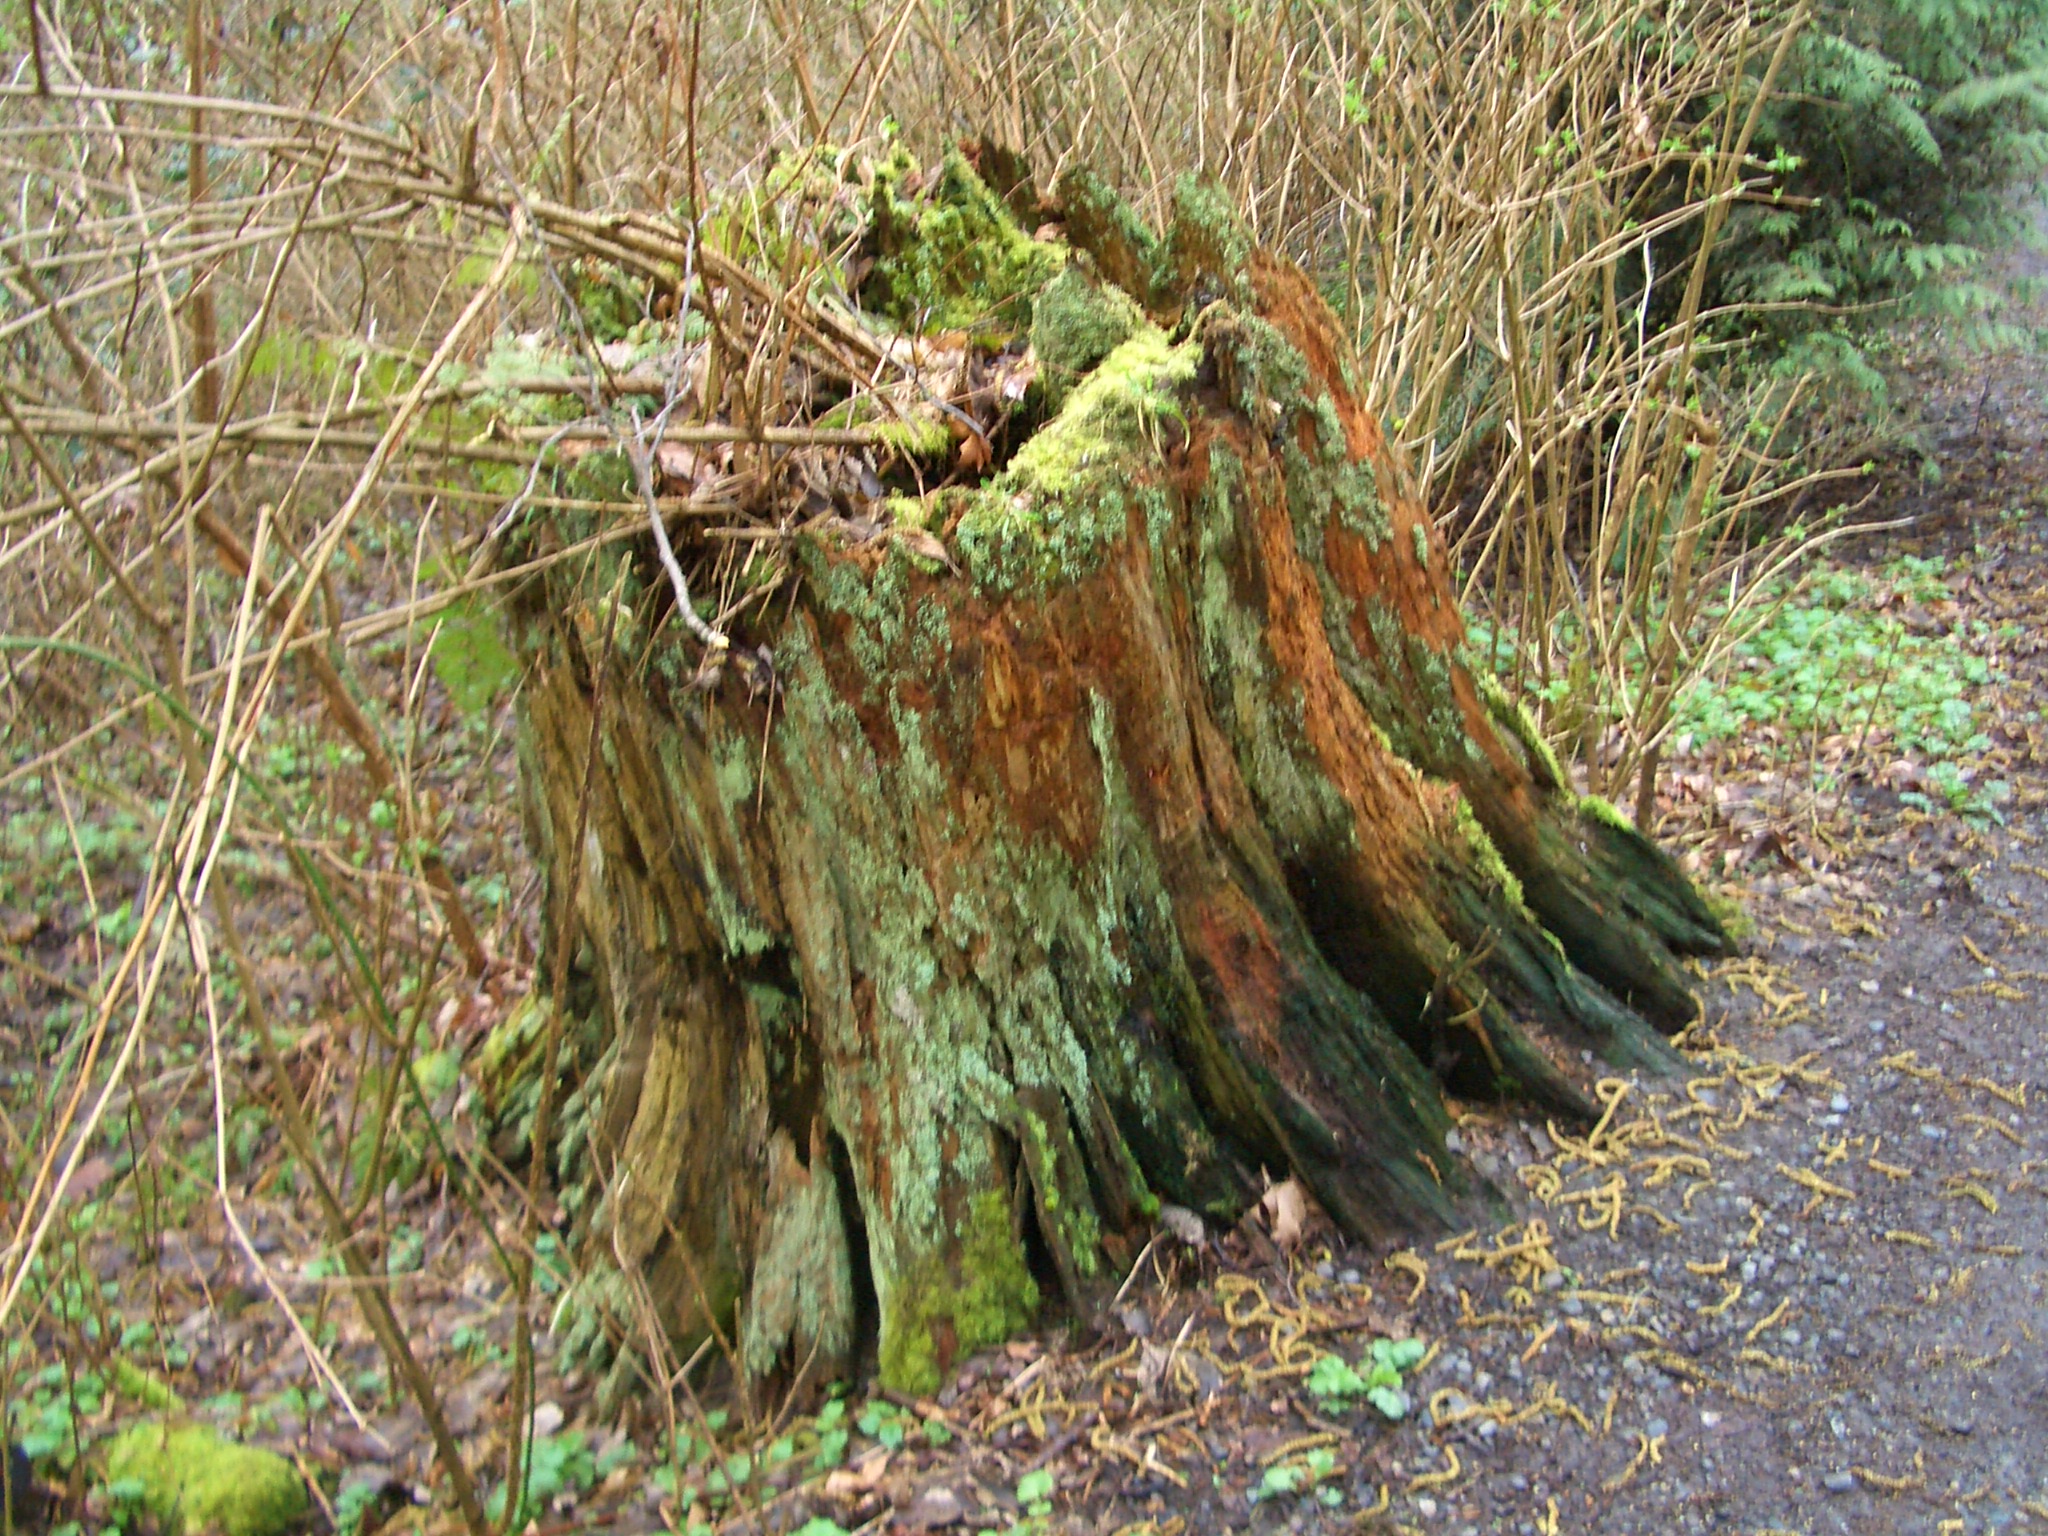 File:Carkeek-Park-Old-tree-stump-3365.jpg - Wikimedia Commons